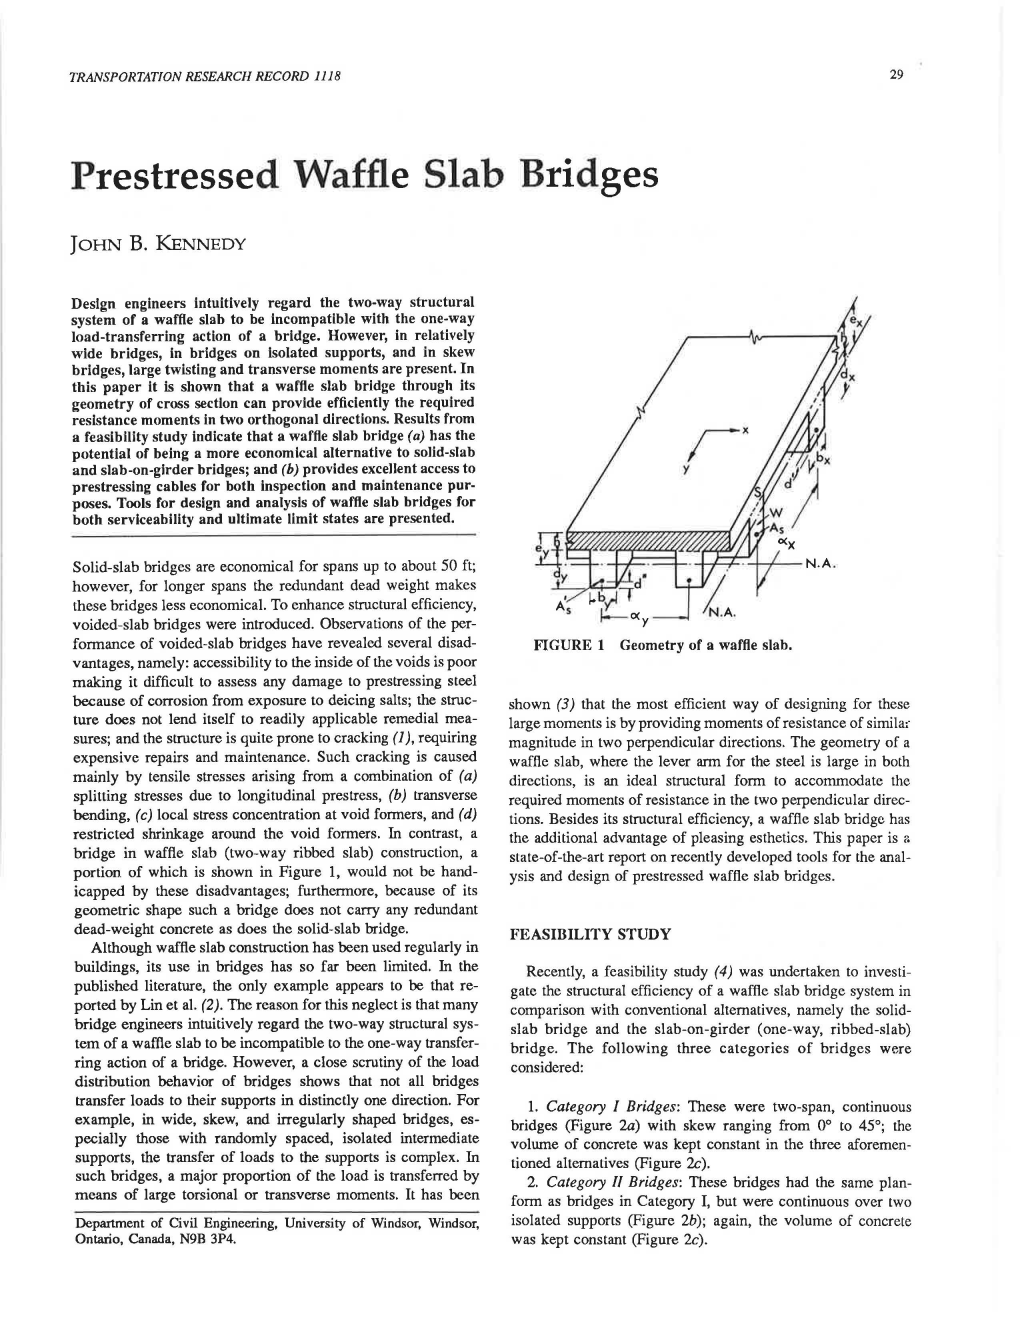 Prestressed Waffle Slab Bridges